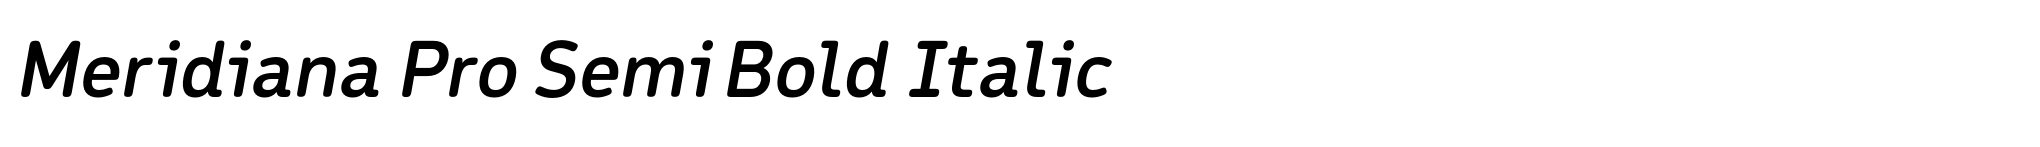 Meridiana Pro Semi Bold Italic image